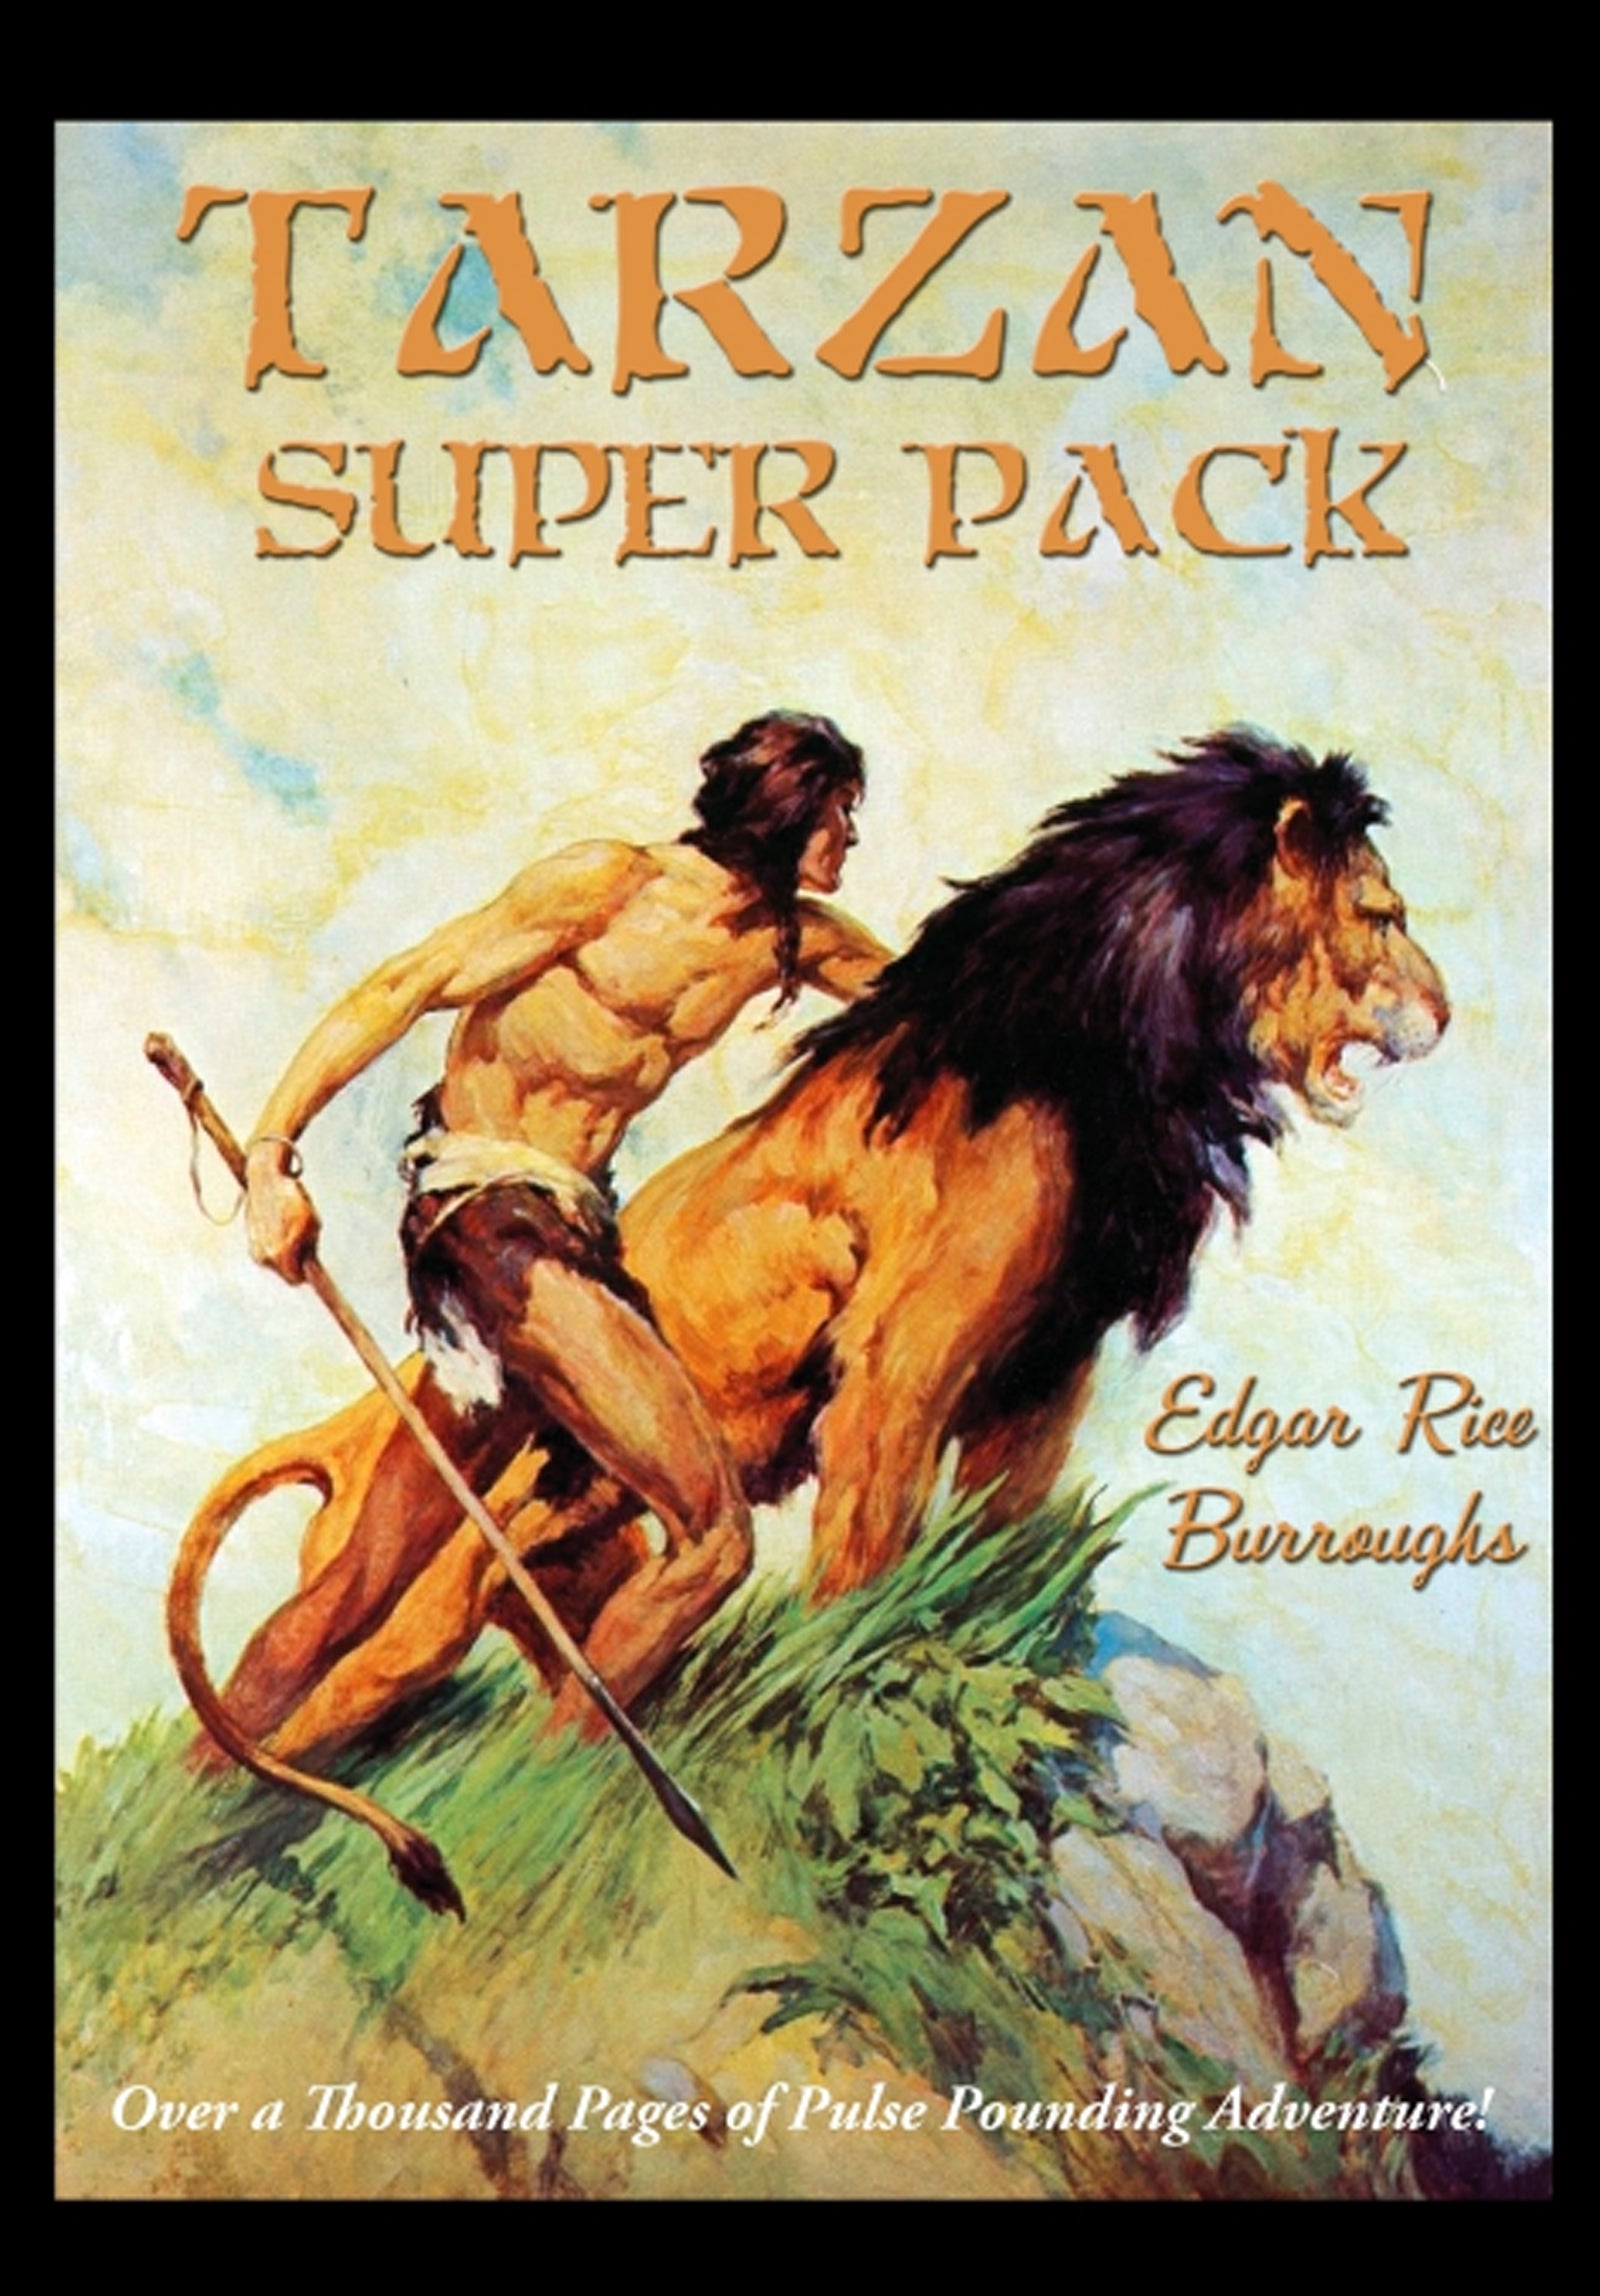 Cover art for Positronic Super Pack #40, the Tarzan Super Pack.